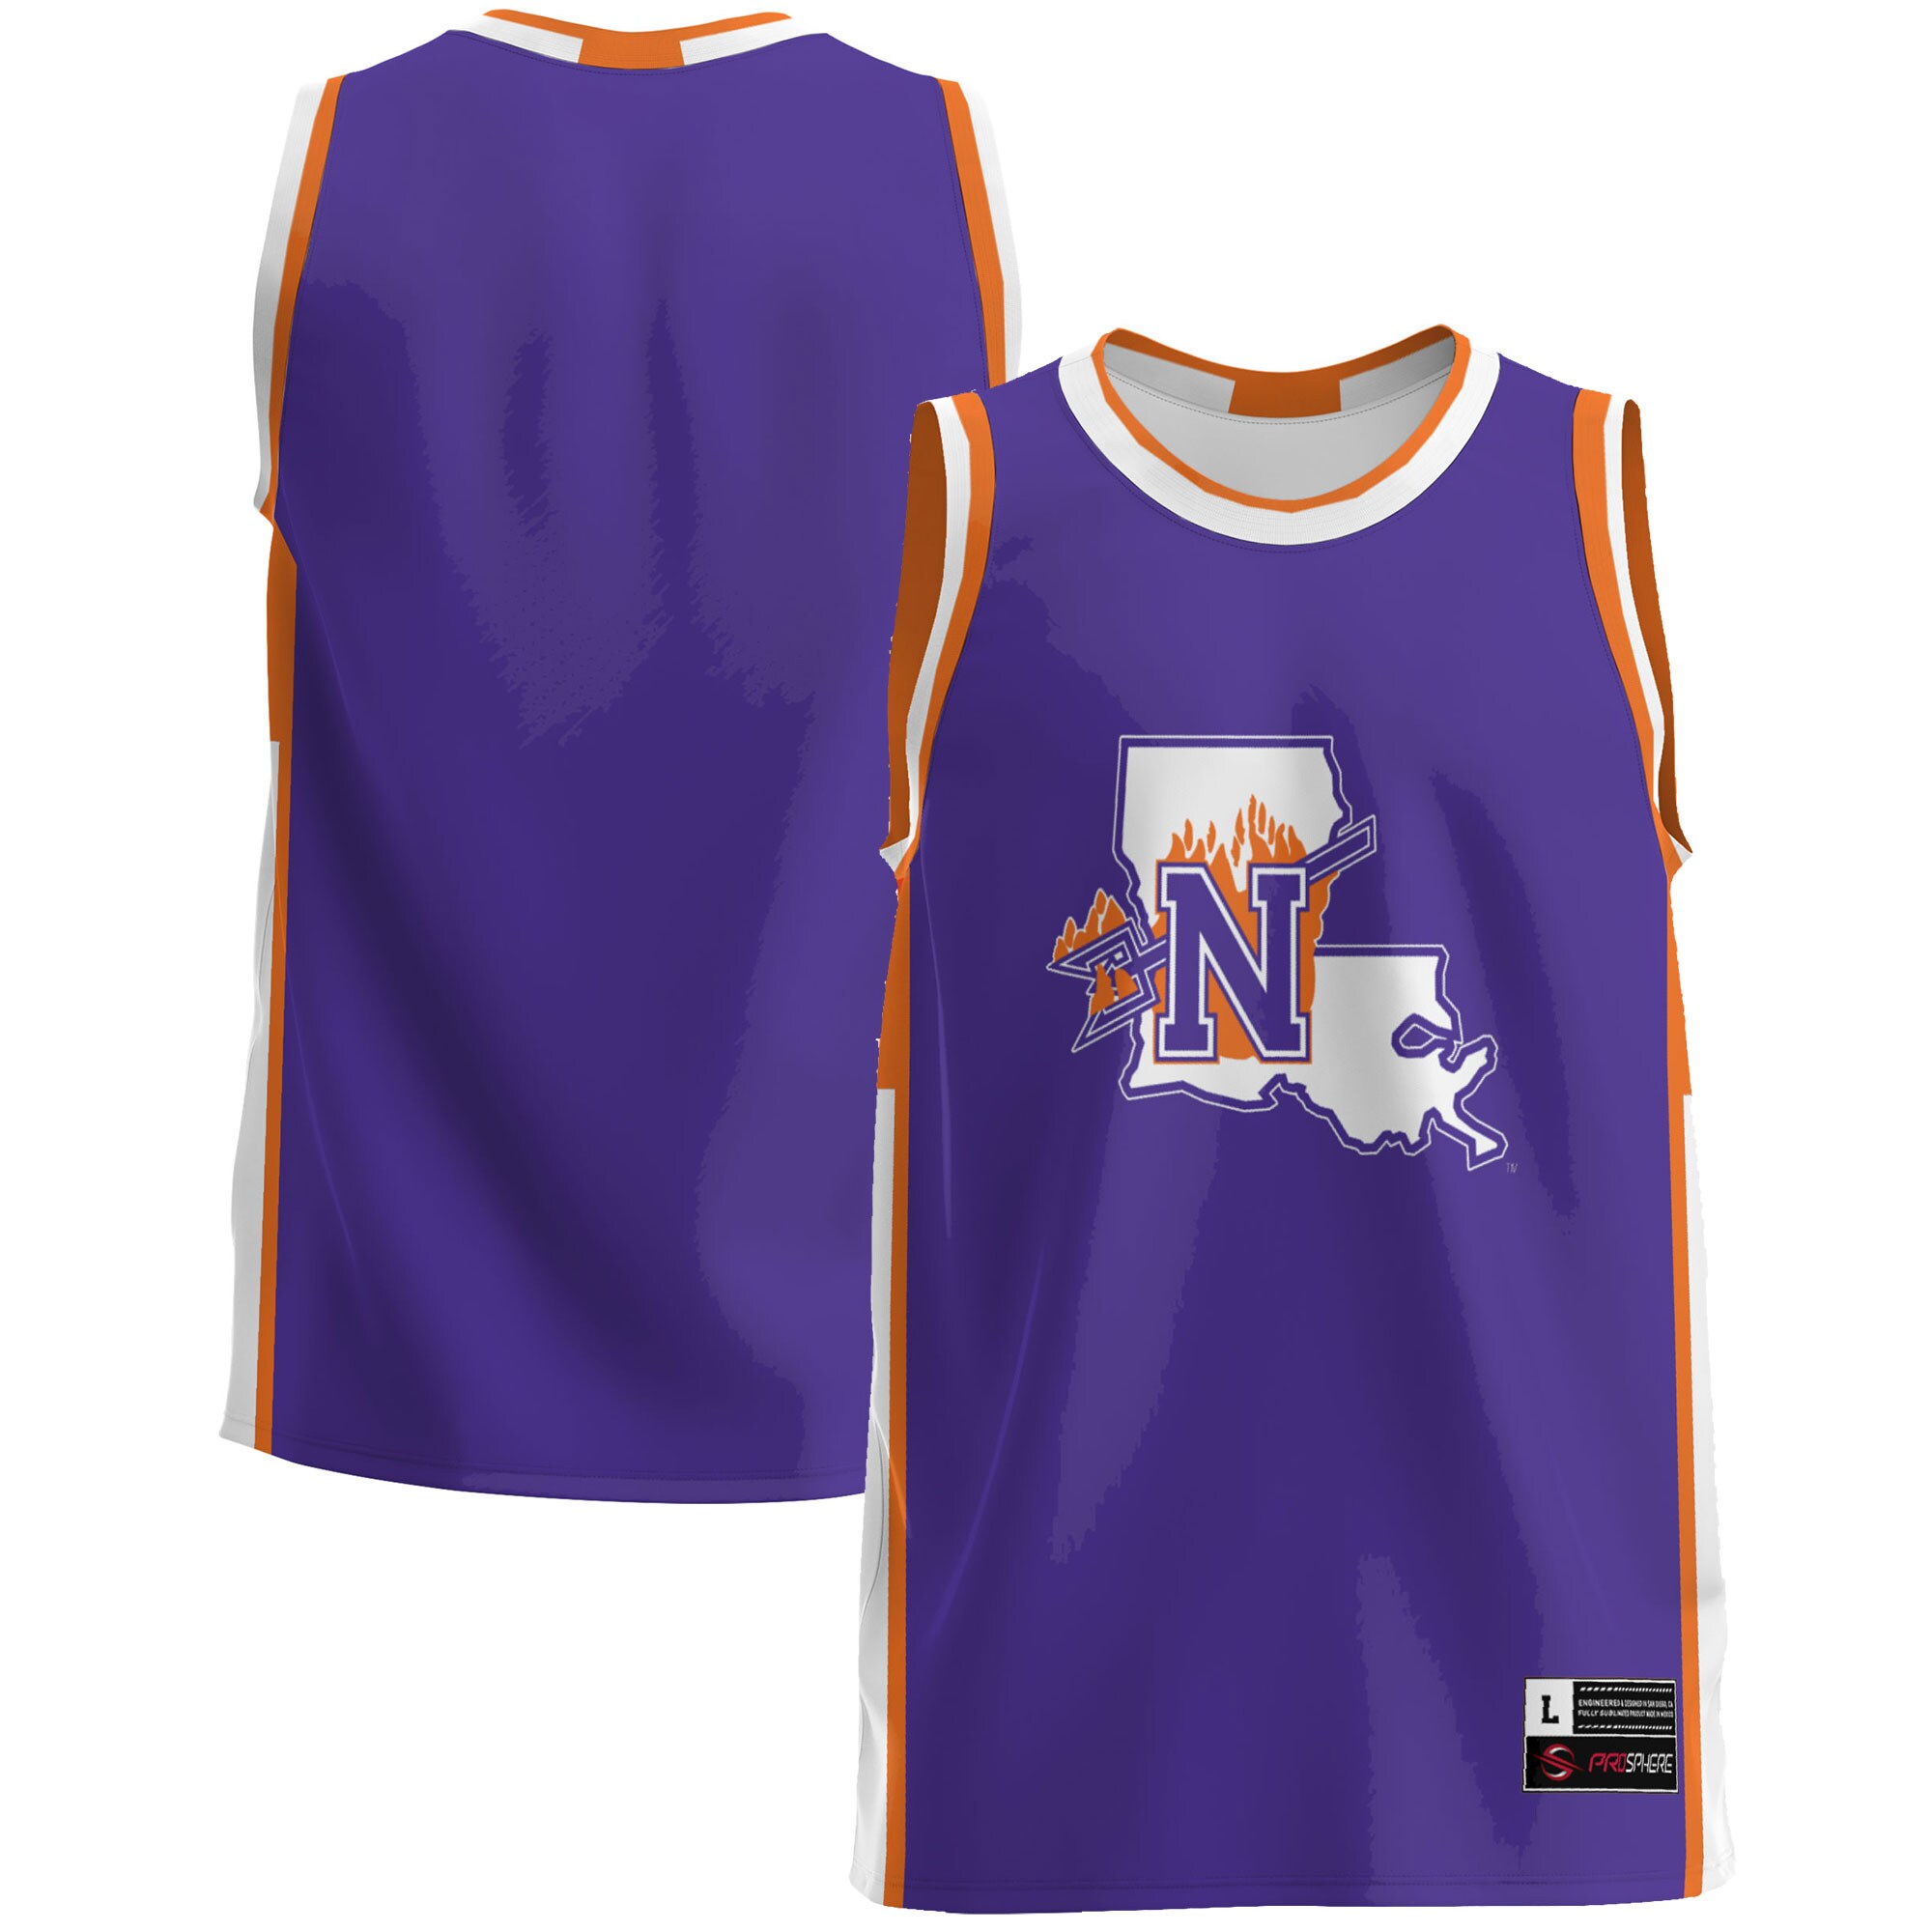 Northwestern State Demons Basketball Jersey - Purple For Youth Women Men